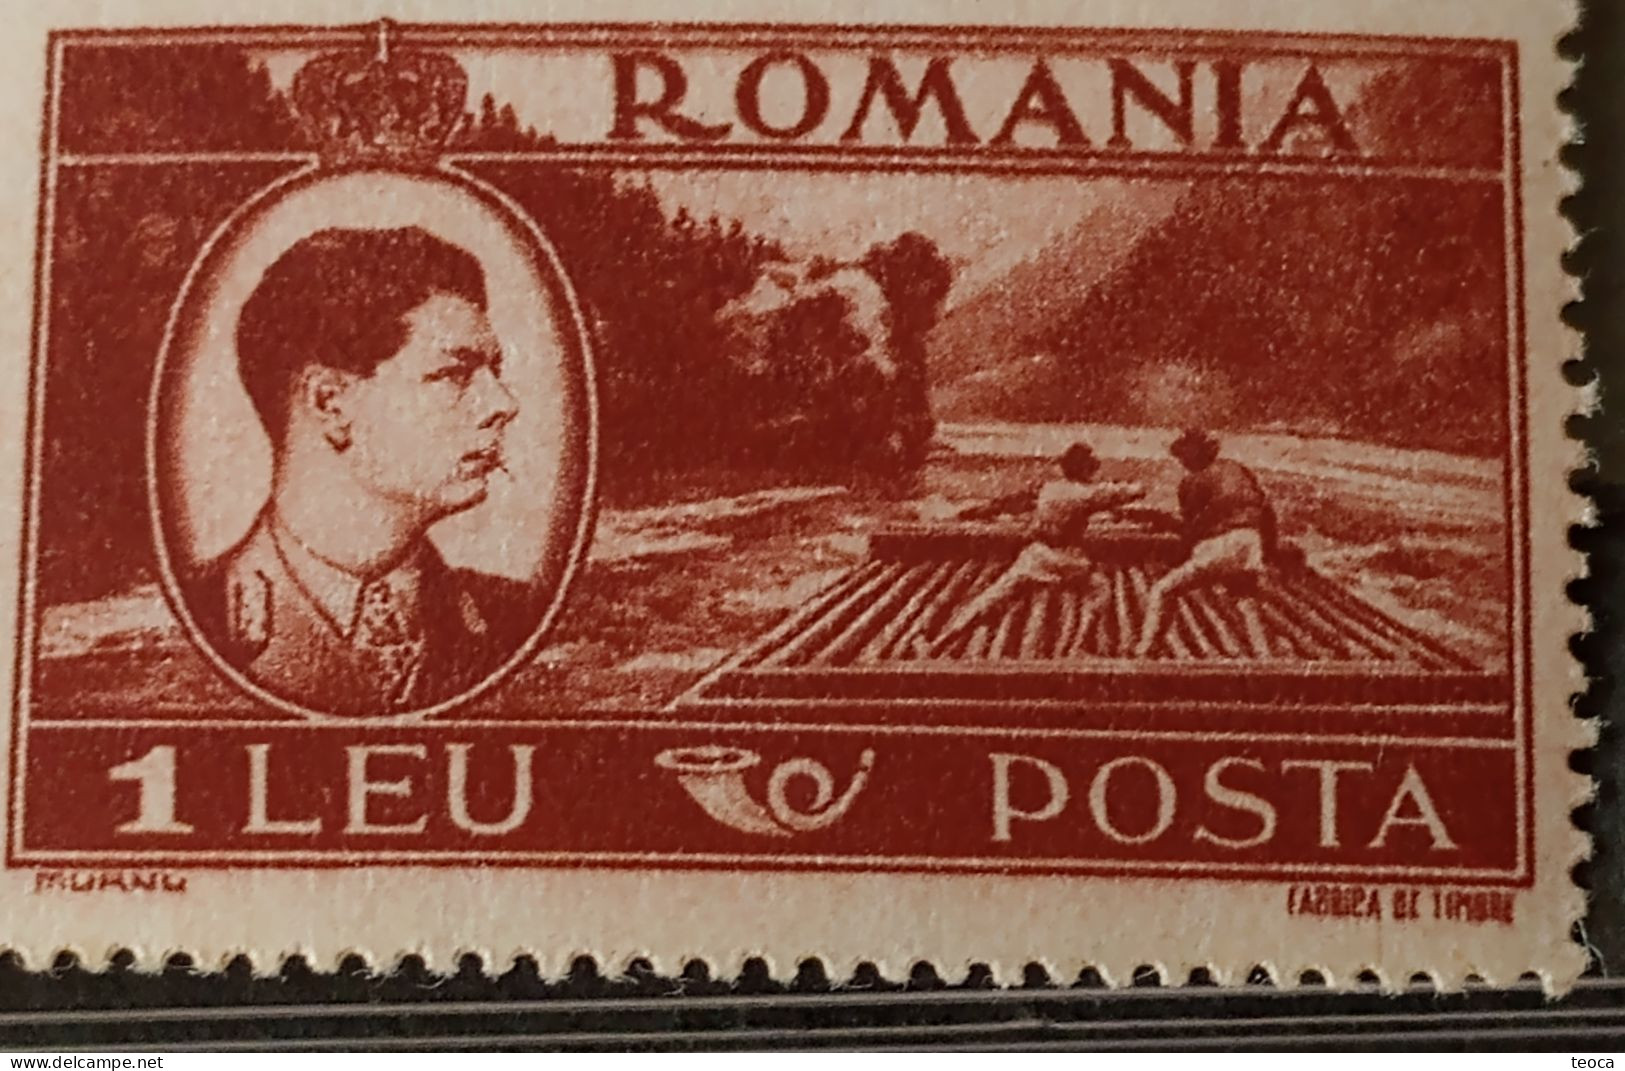 Stamps Errors Romania 1947 Mi 1067,king Michael,printed With Line Unused - Unused Stamps